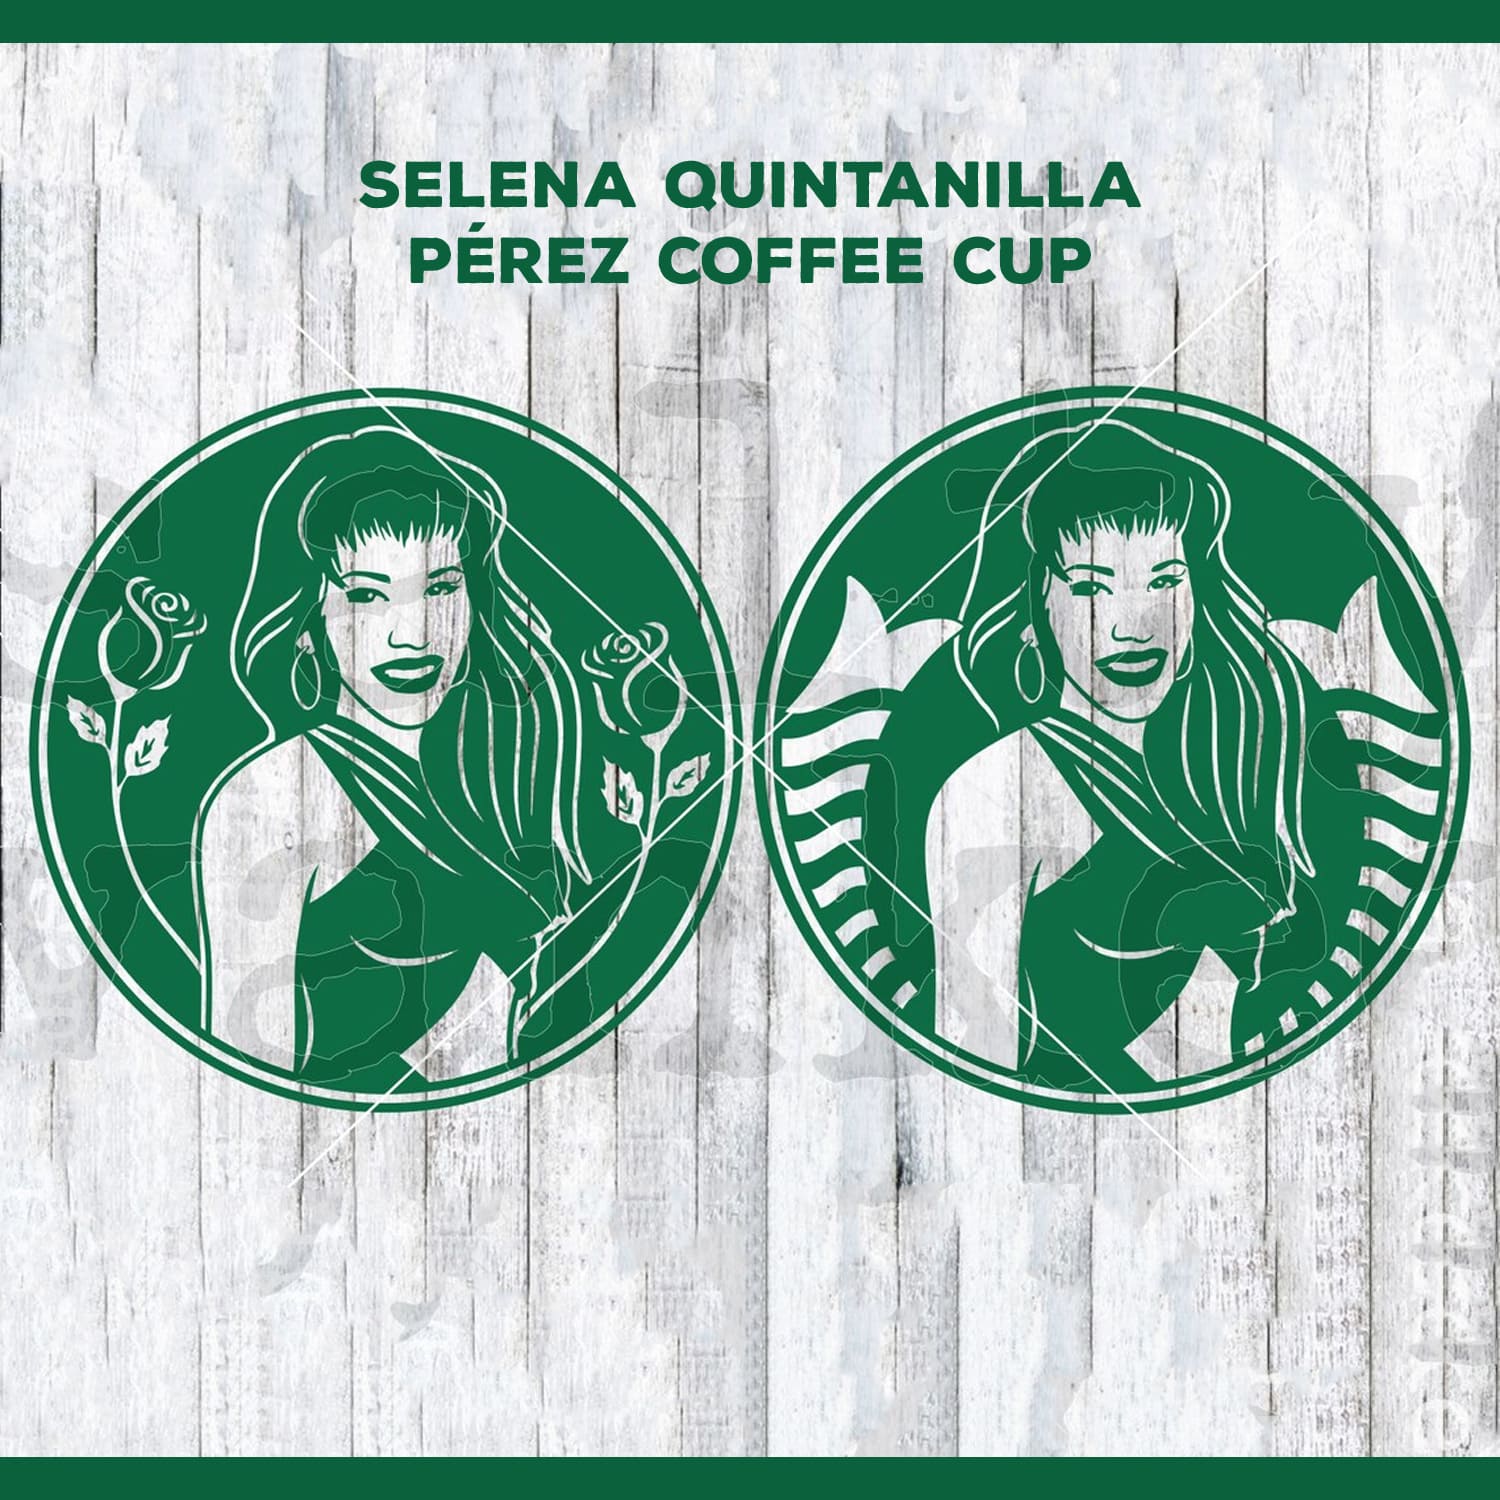 selena quintanilla perez coffee cup logo circle svg file download for your design.